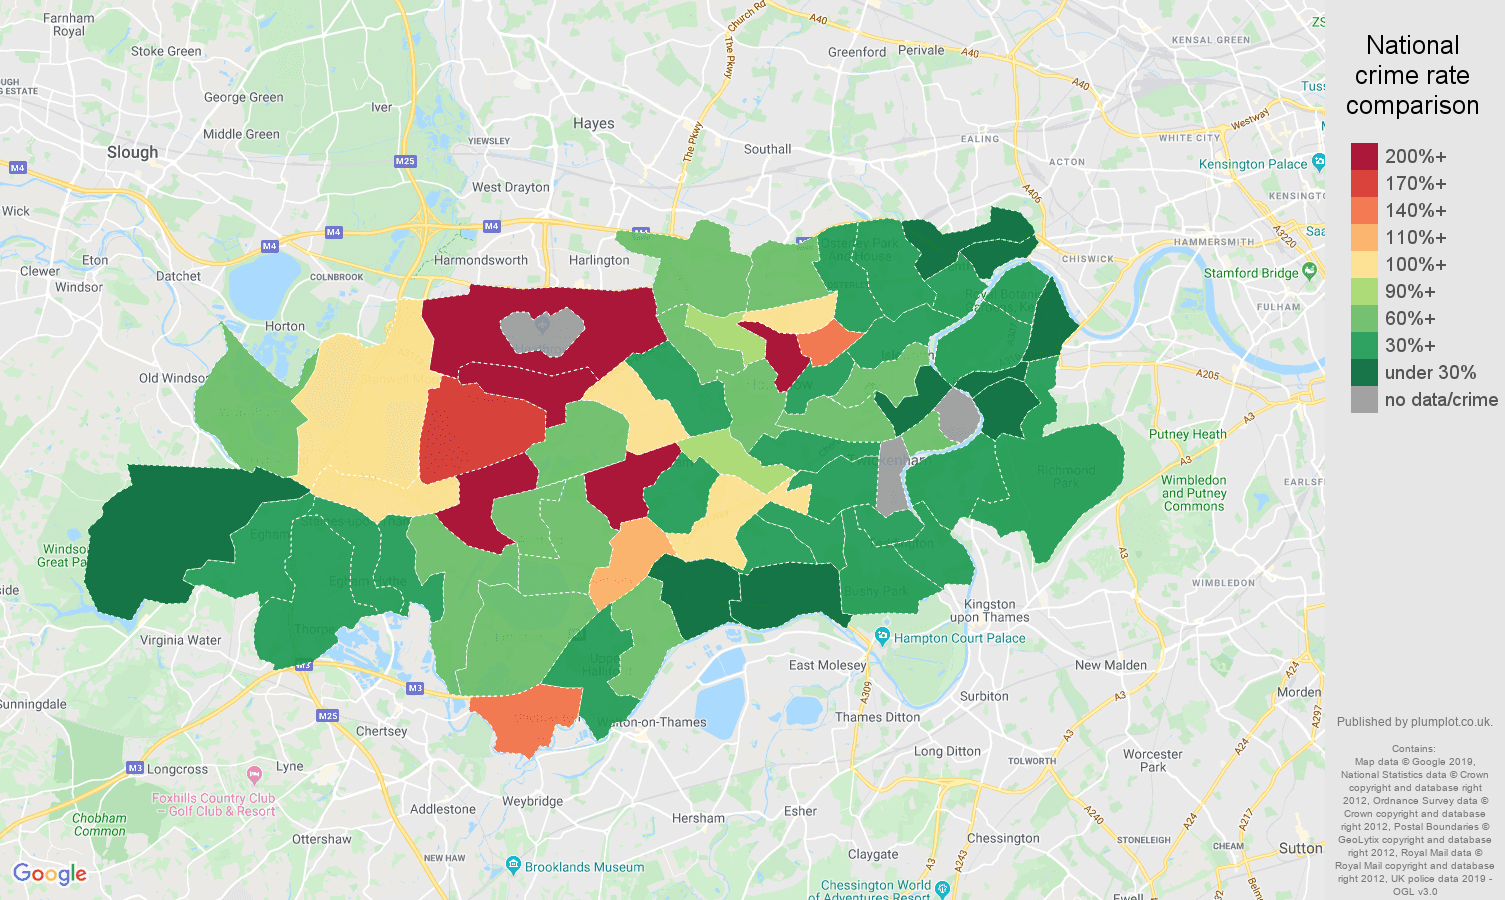 Twickenham other crime rate comparison map